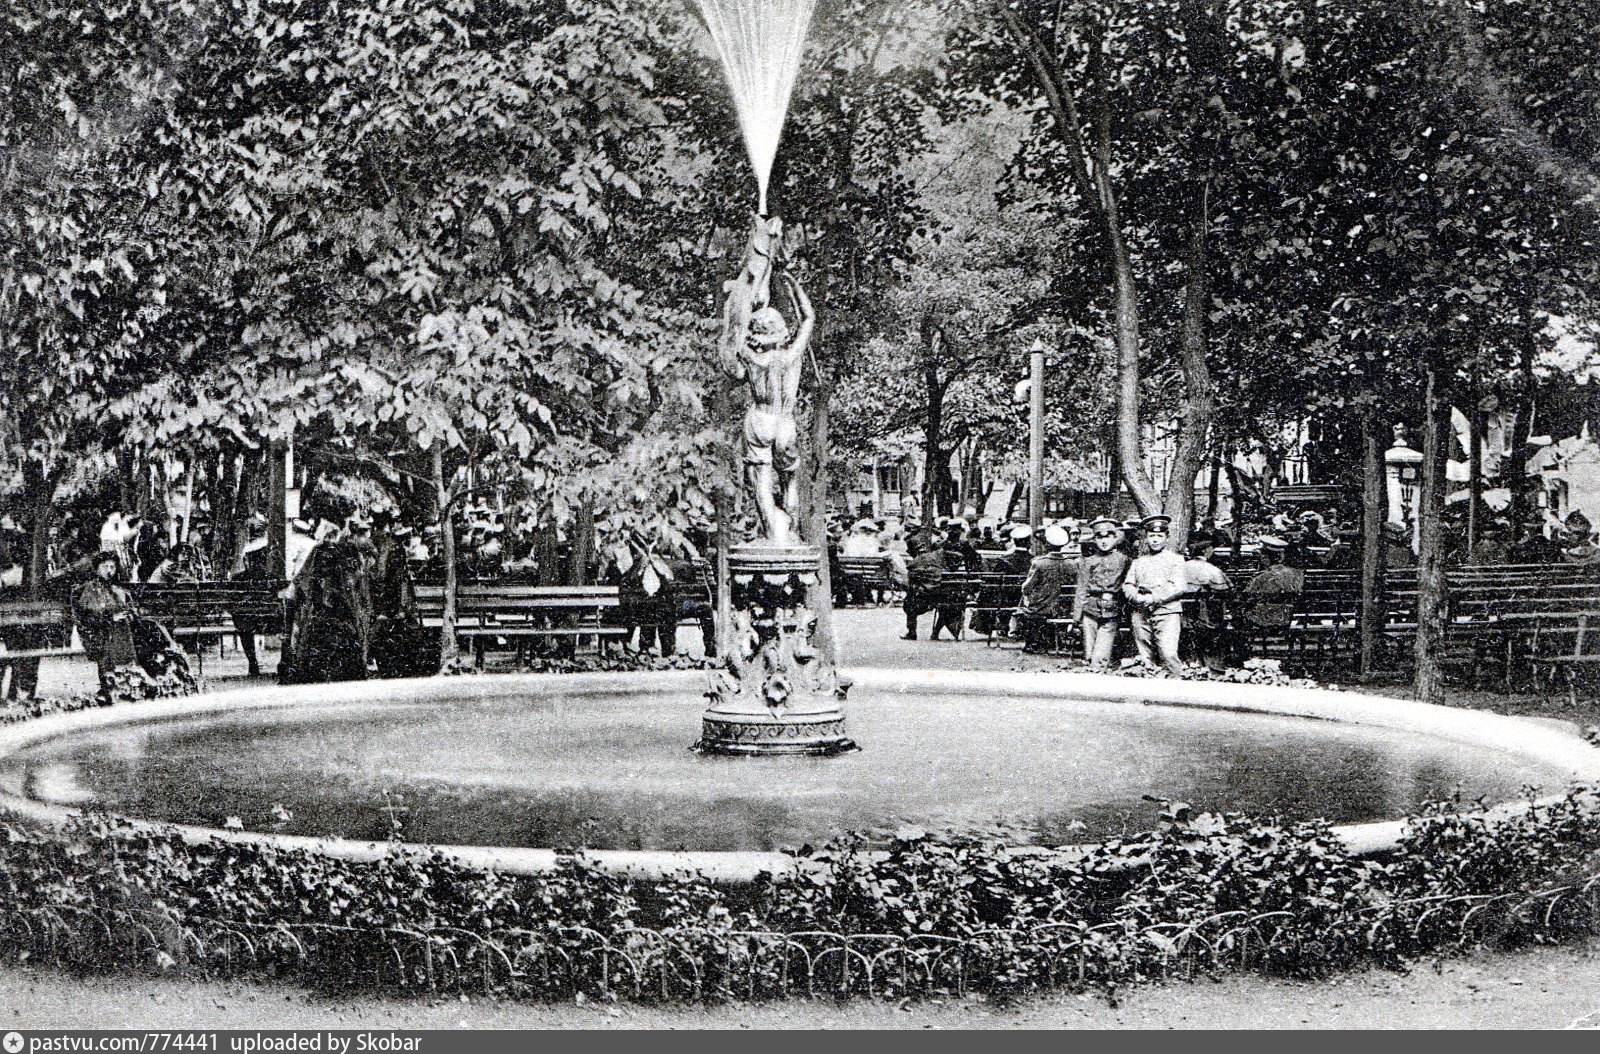 фонтан на арбатской площади